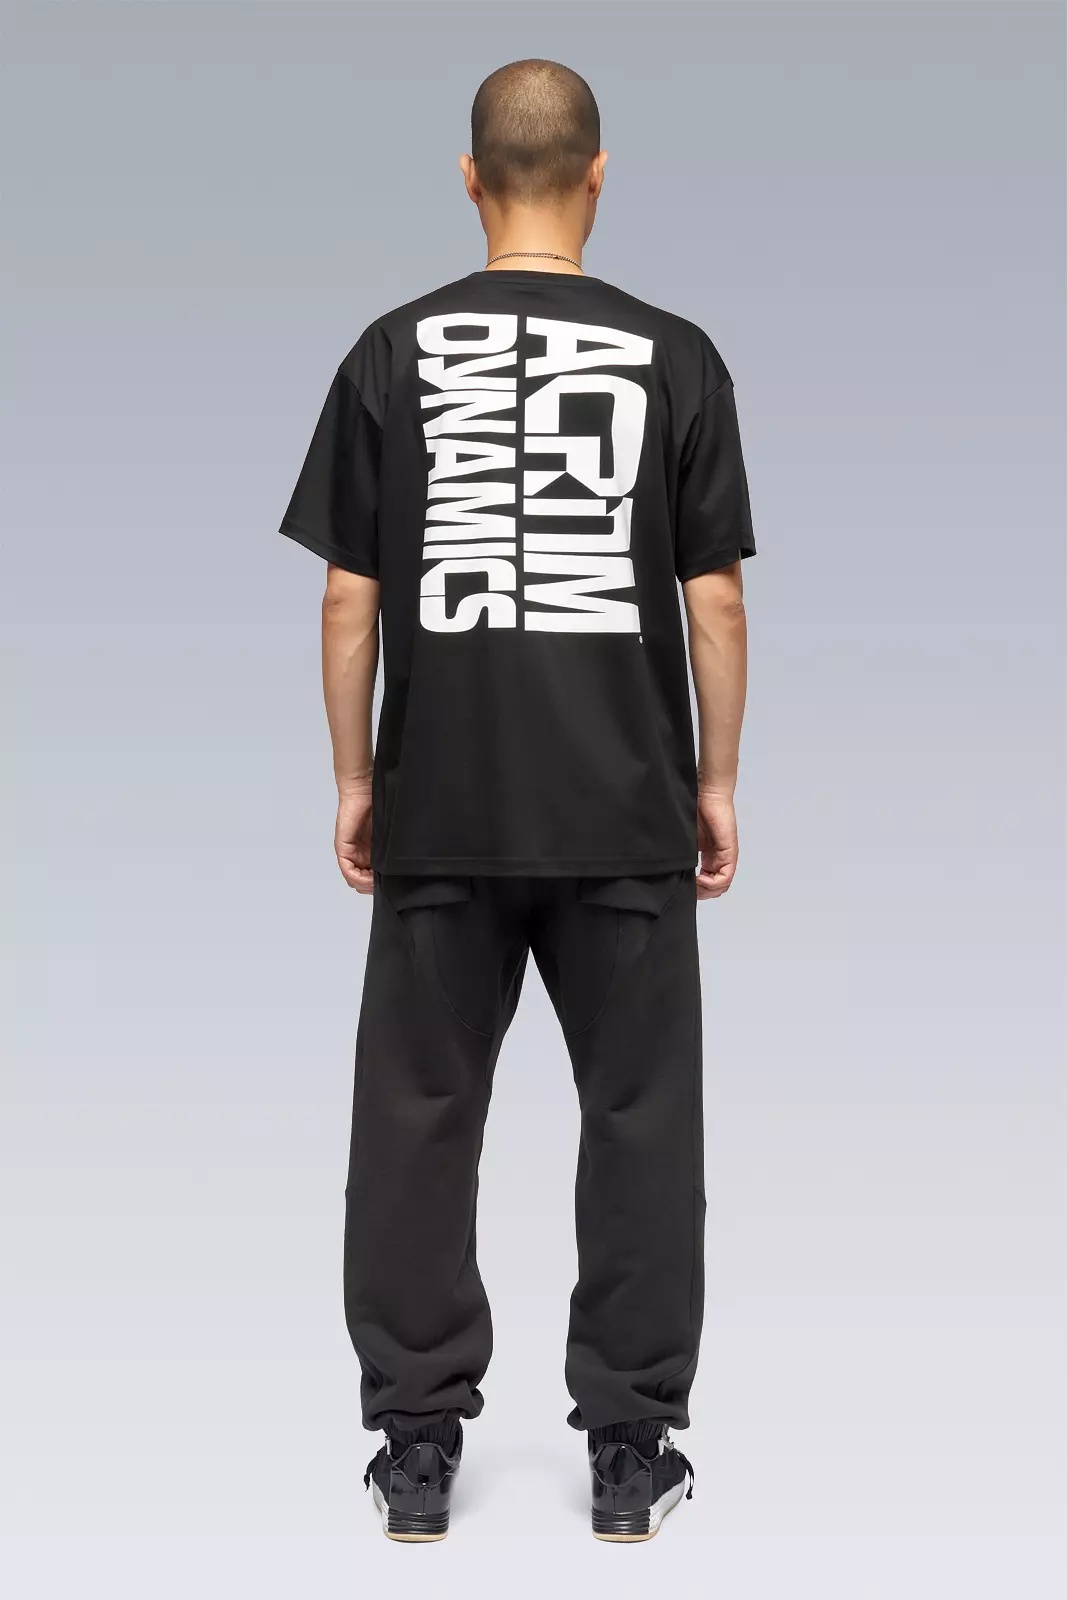 S24-PR-A 100% Cotton Mercerized Short Sleeve T-shirt Black - 2